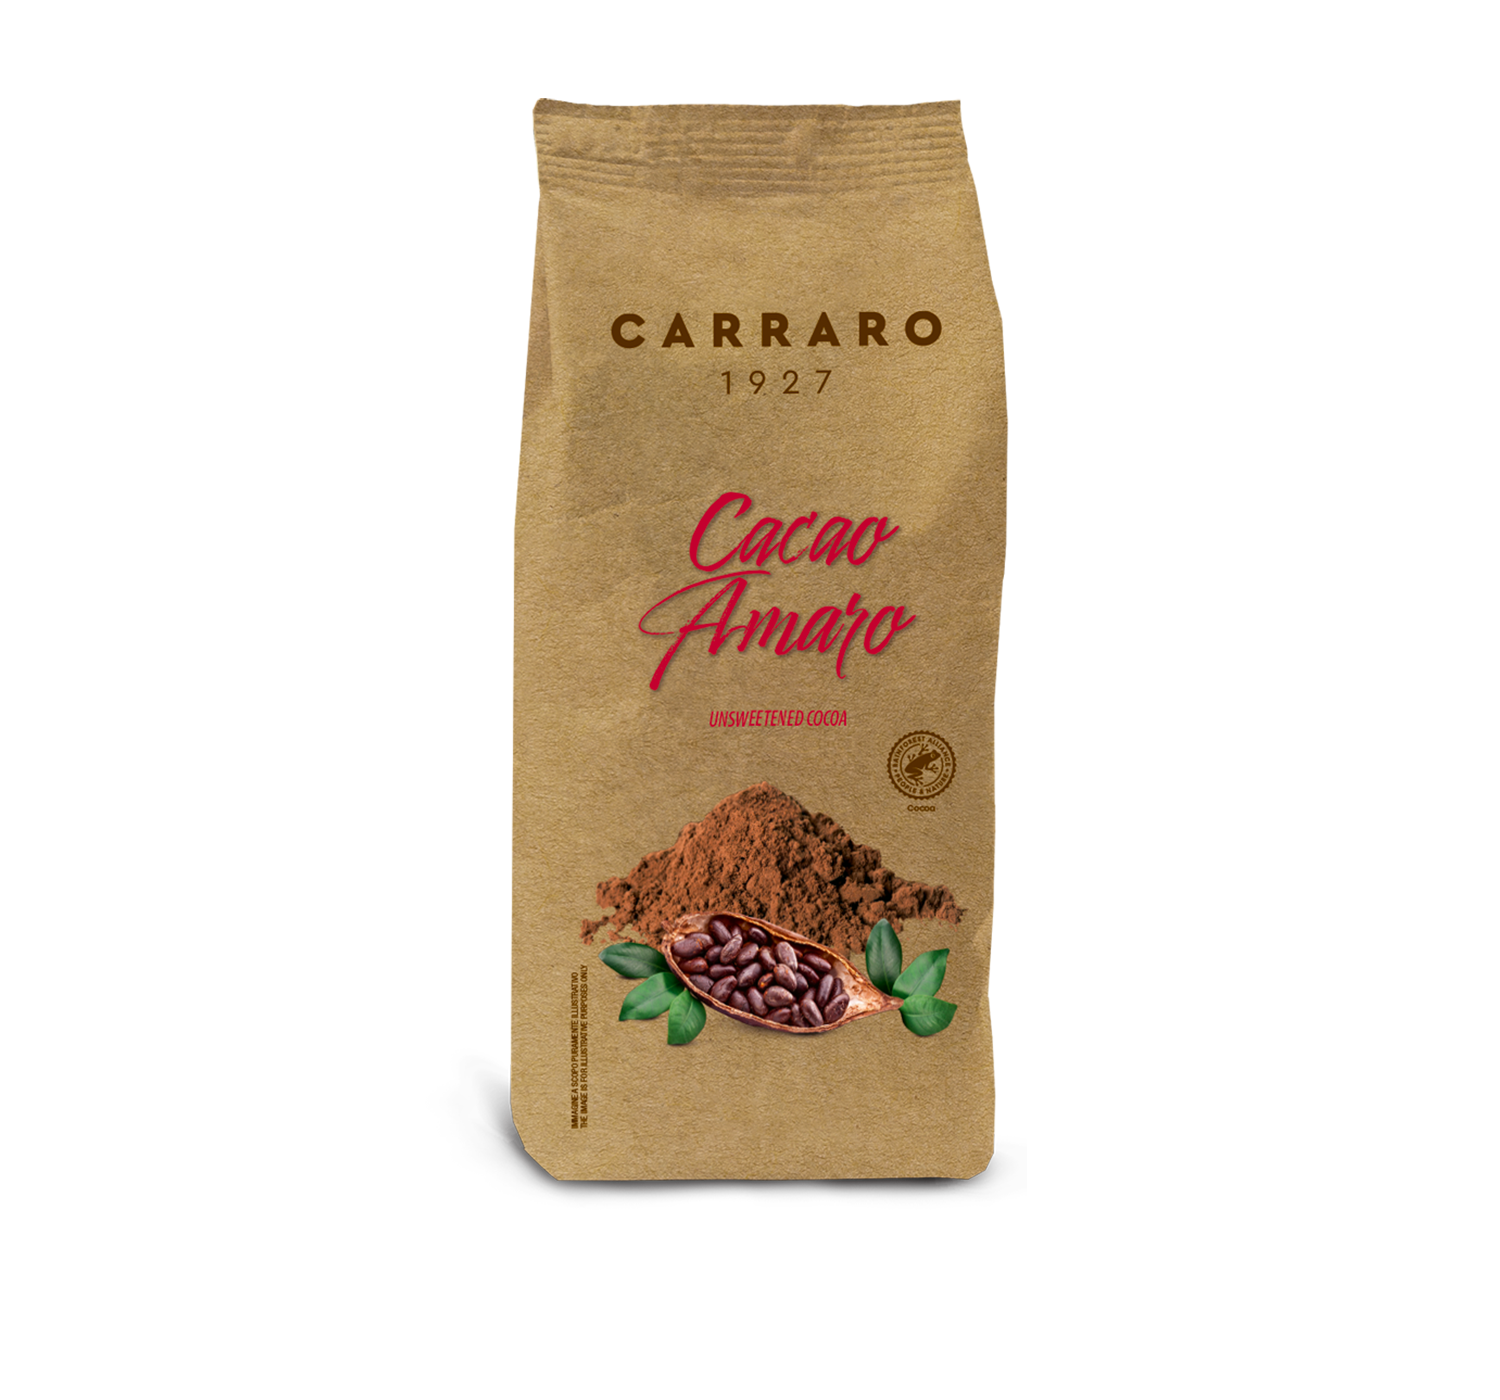 Cocoa - Cacao amaro – 500 g - Shop online Caffè Carraro